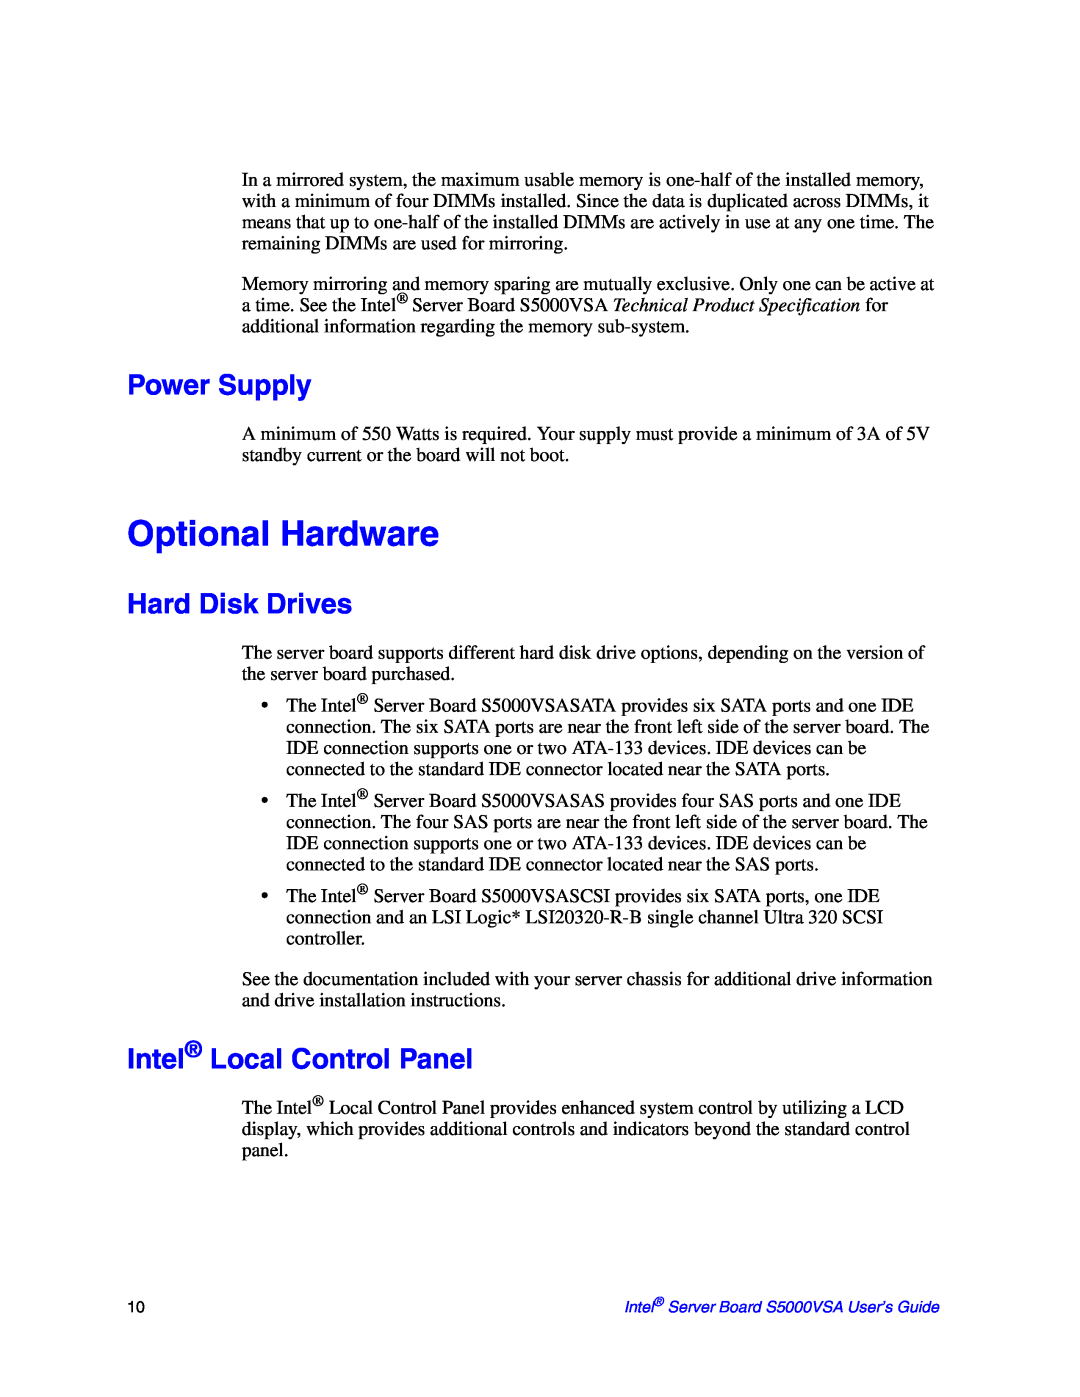 Intel S5000VSA manual Optional Hardware, Power Supply, Hard Disk Drives, Intel Local Control Panel 